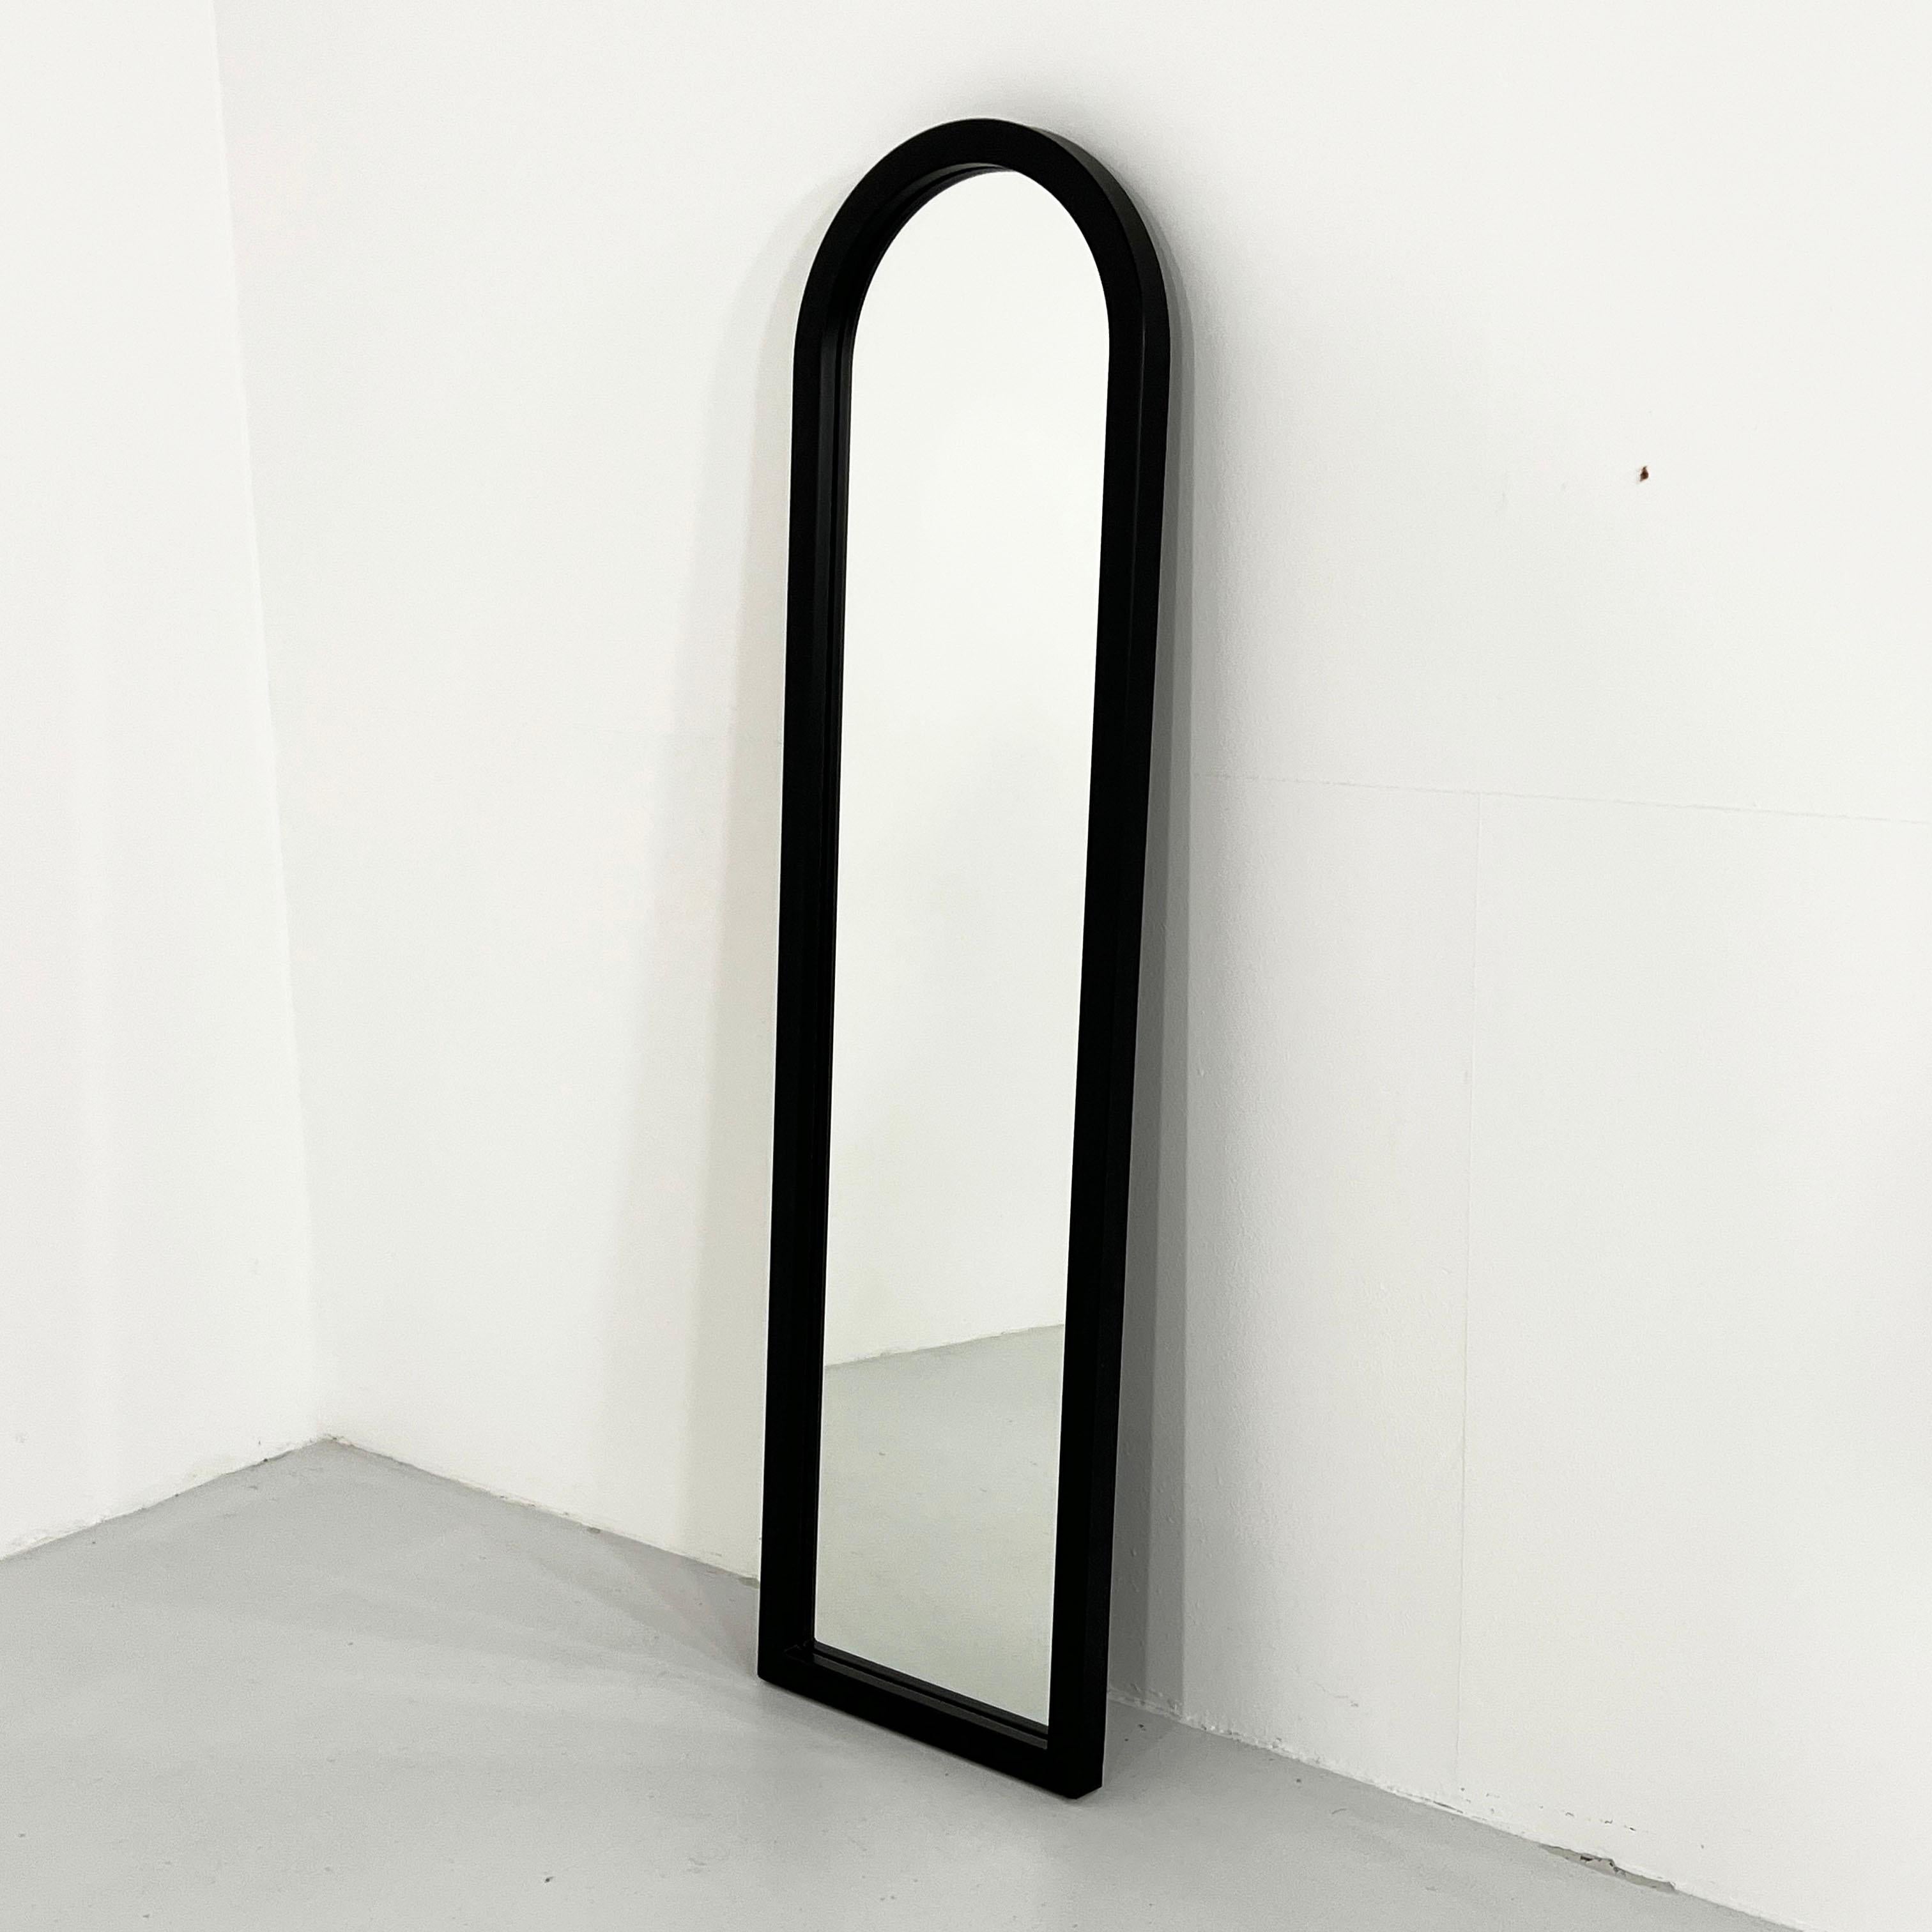 Late 20th Century Black Frame Mirror by Anna Castelli Ferrieri for Kartell, 1980s